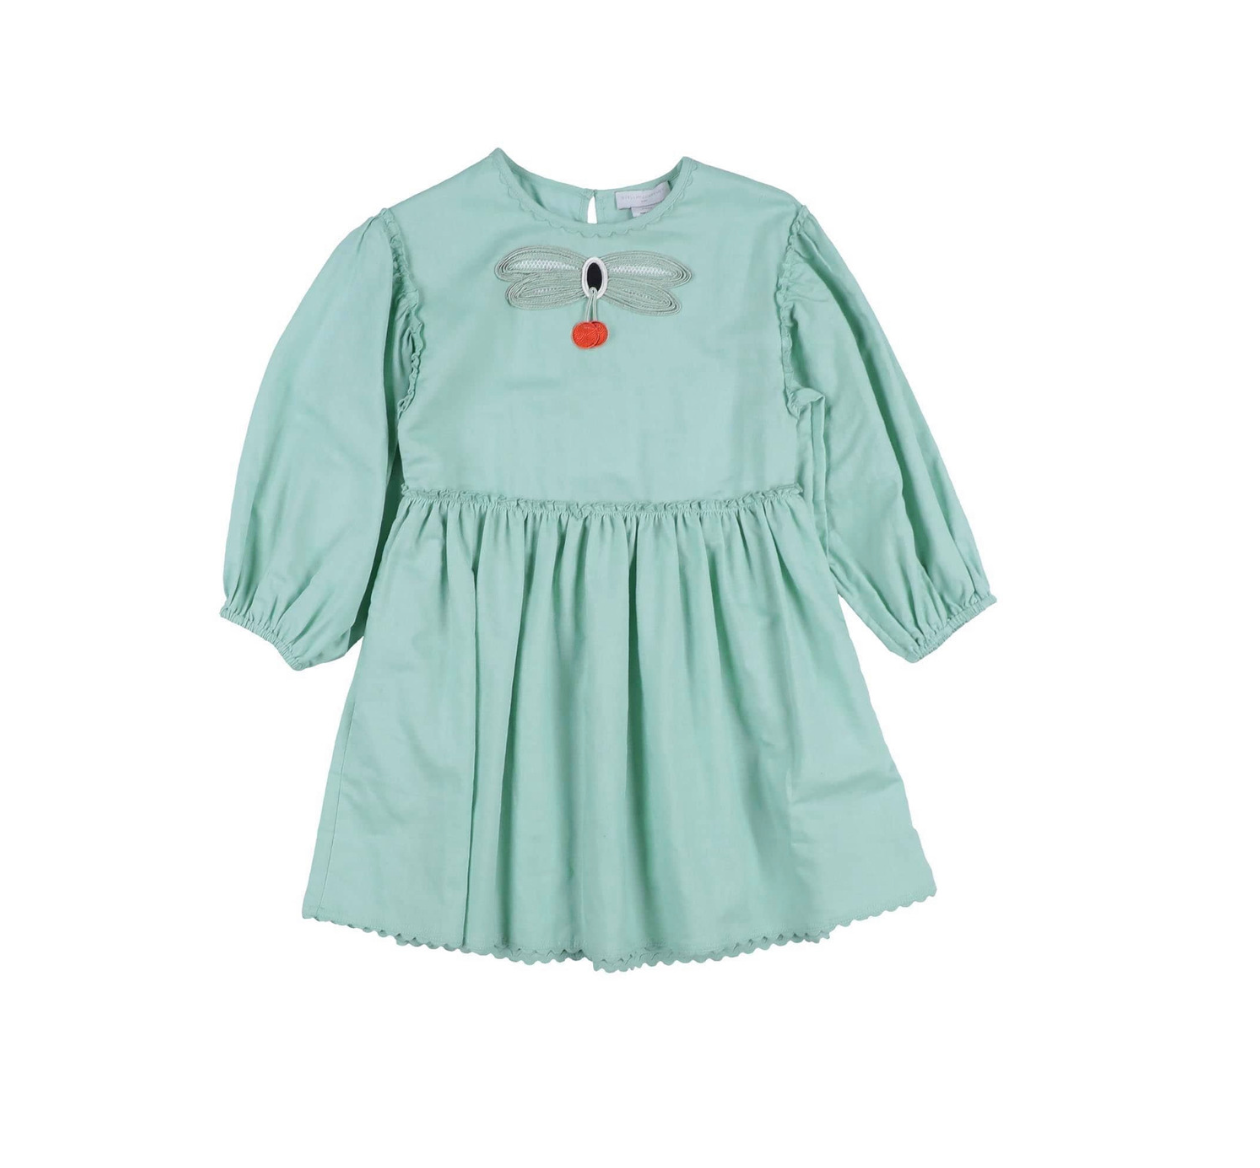 STELLA MCCARTNEY - Linen dress - 5 years old